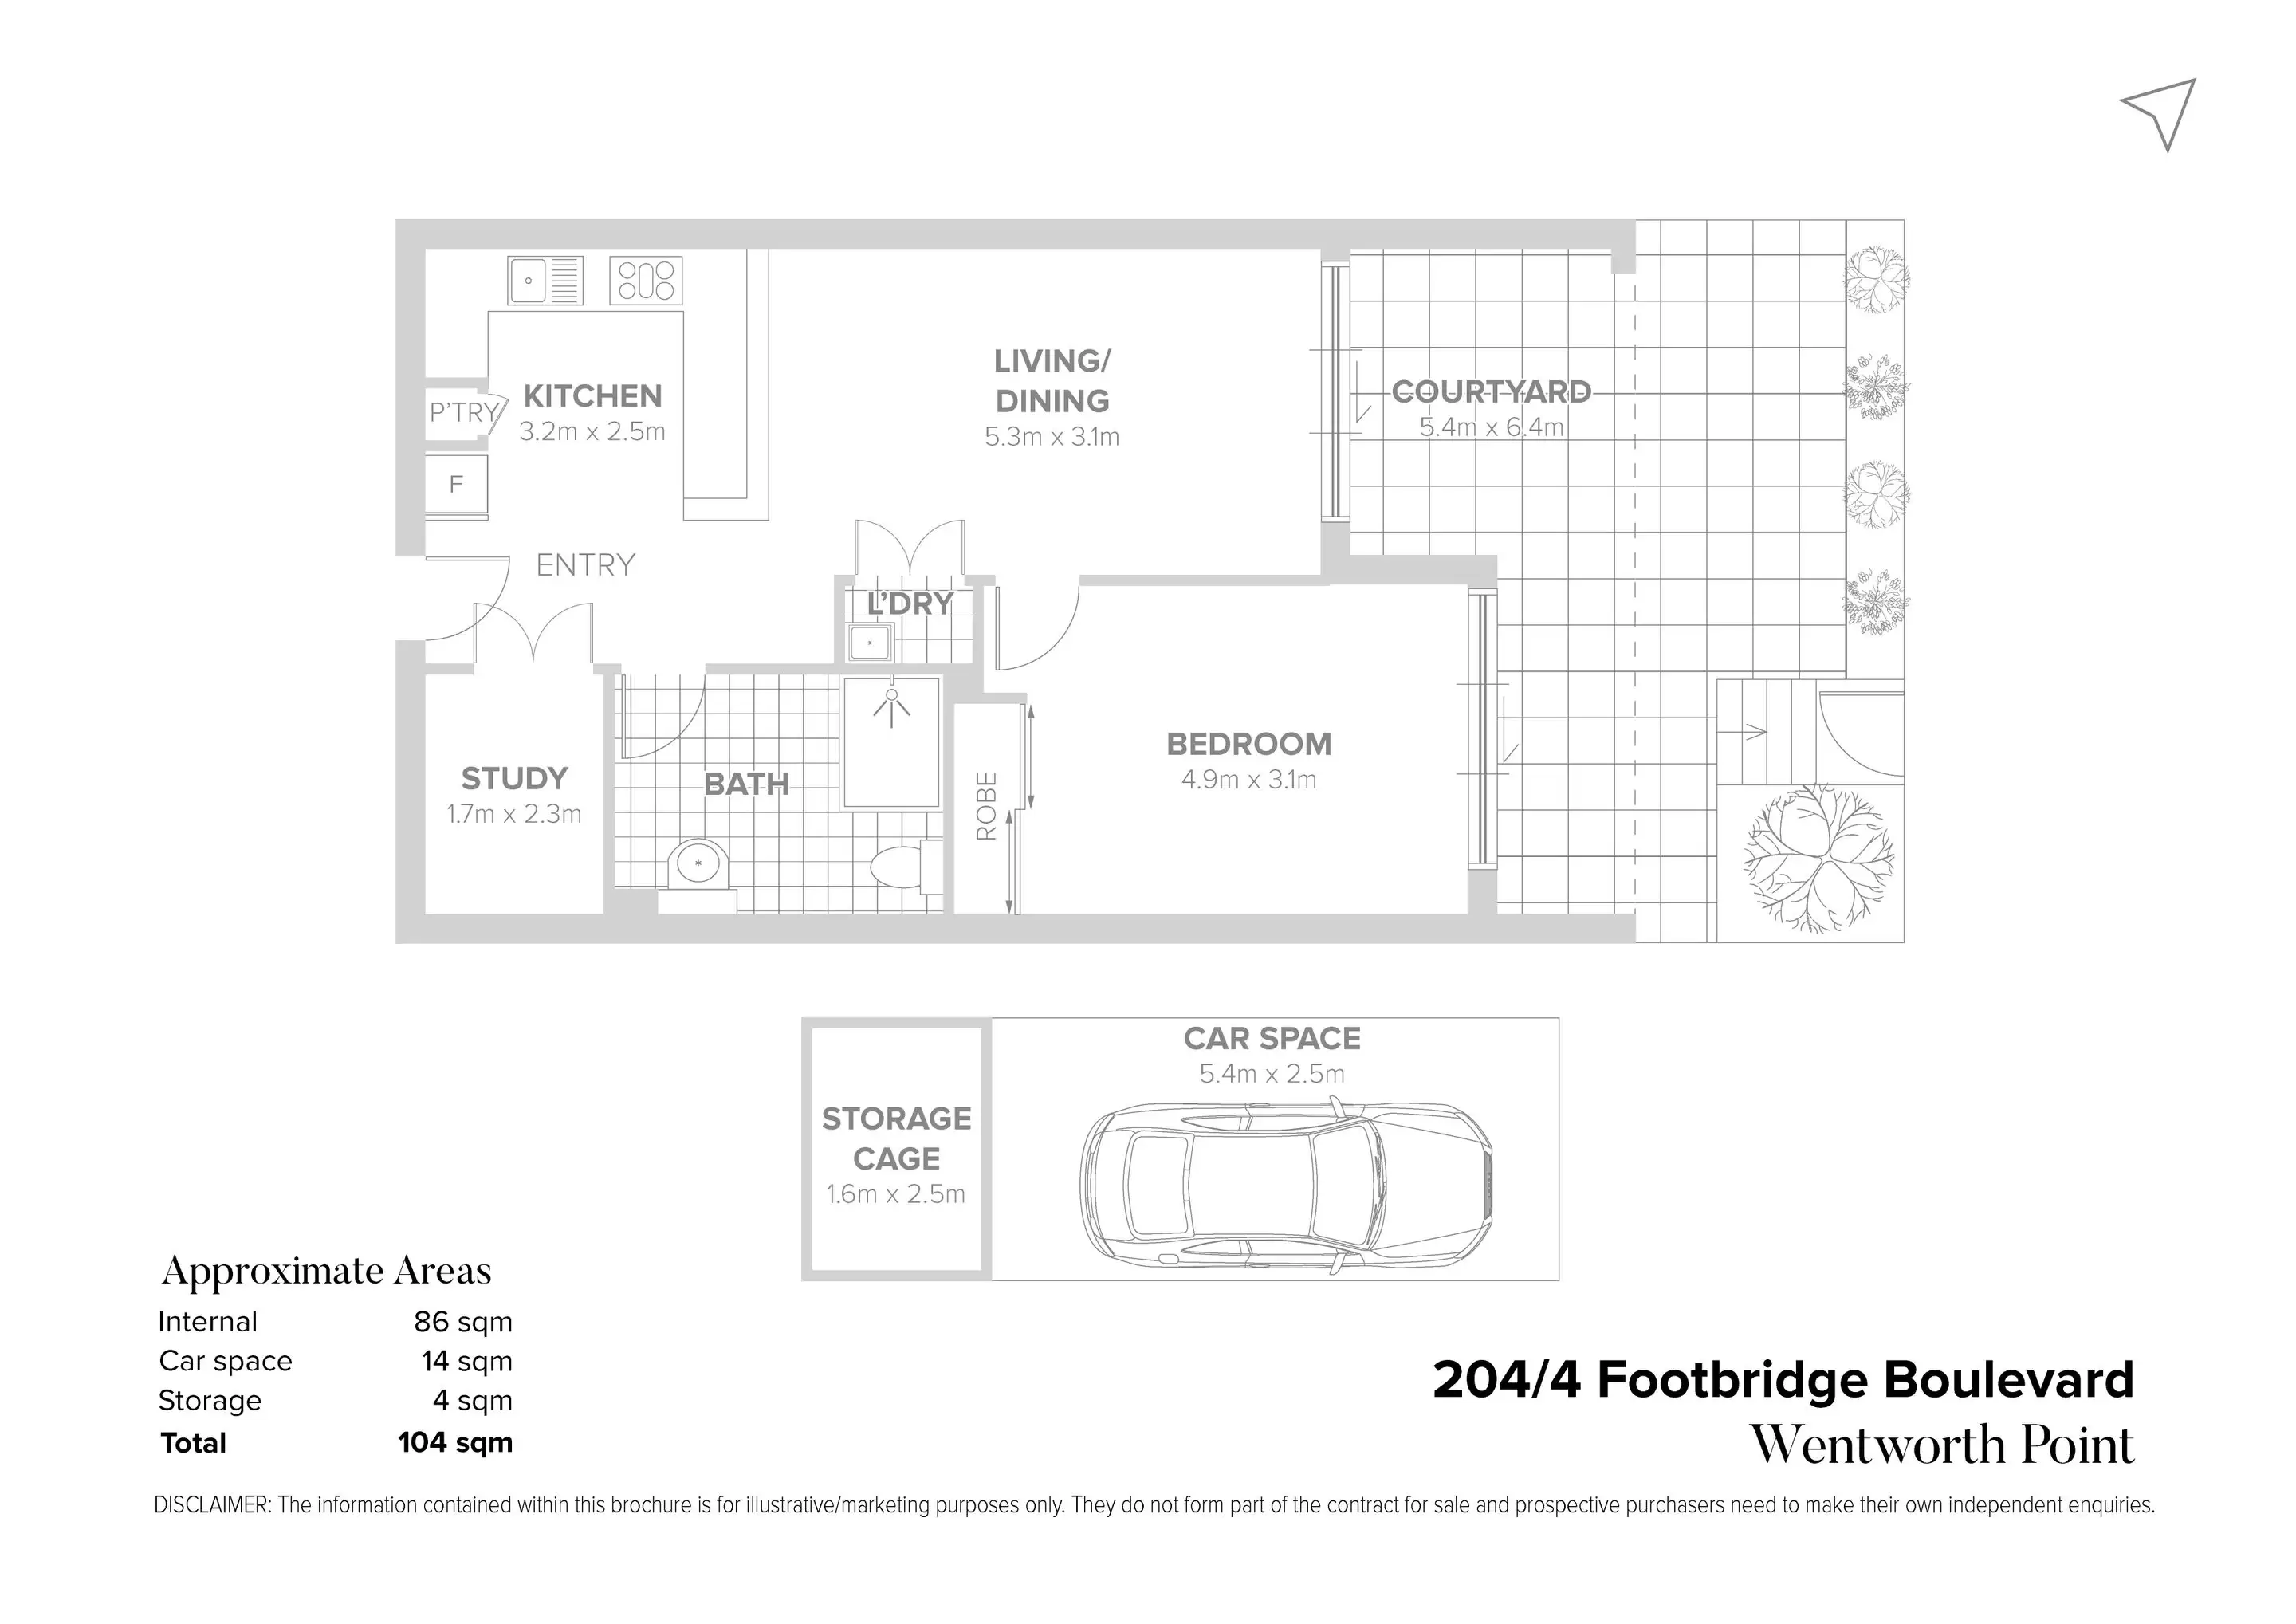 204/4 Footbridge Boulevard, Wentworth Point Sold by Chidiac Realty - floorplan